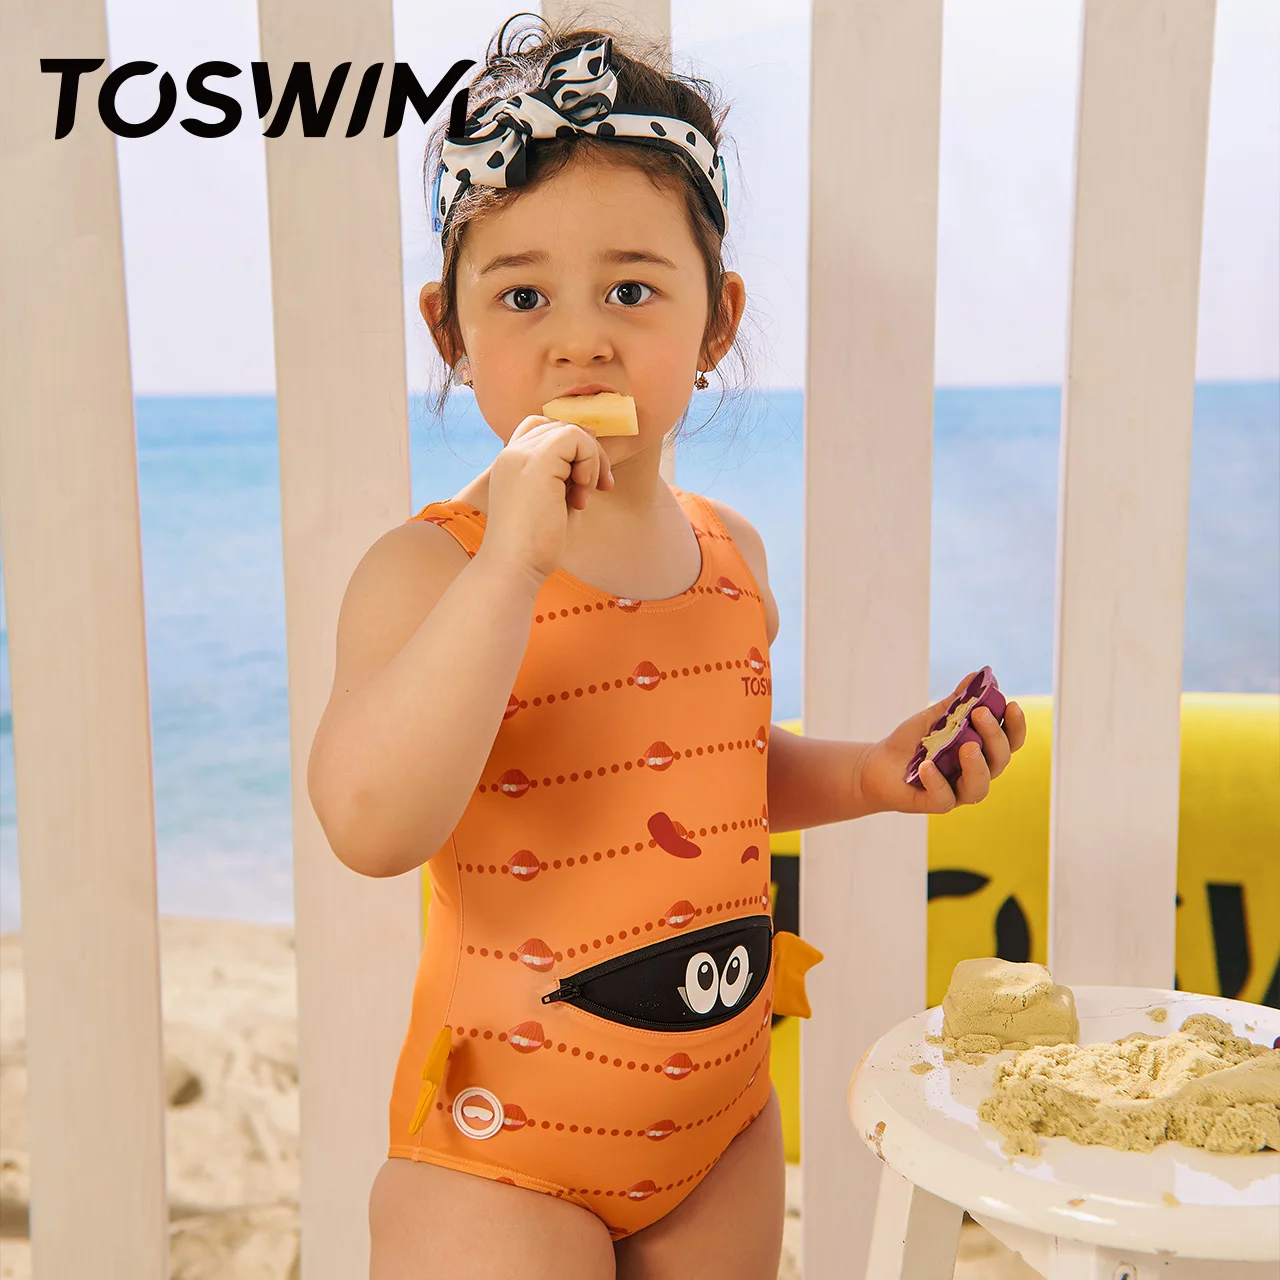 

2-8 Years Old Girl One piece Swimsuit Toddler Kids Swimwear Sleeveless Beachwear for Child Lovable Crab Style Big Eyes pattern, Orange